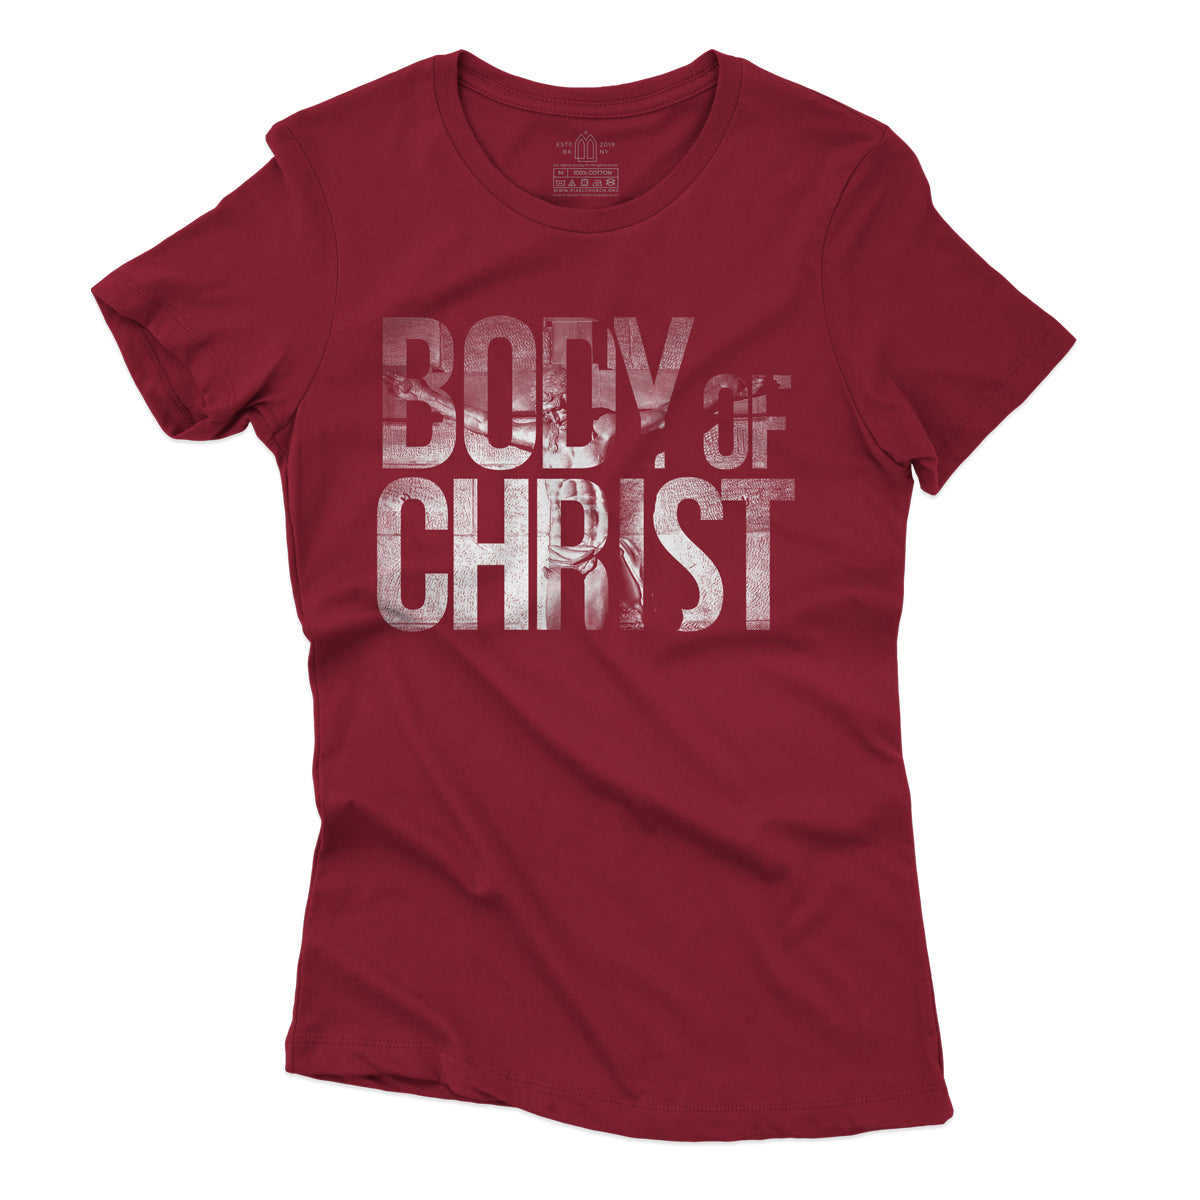 Body of Christ Women's Tee